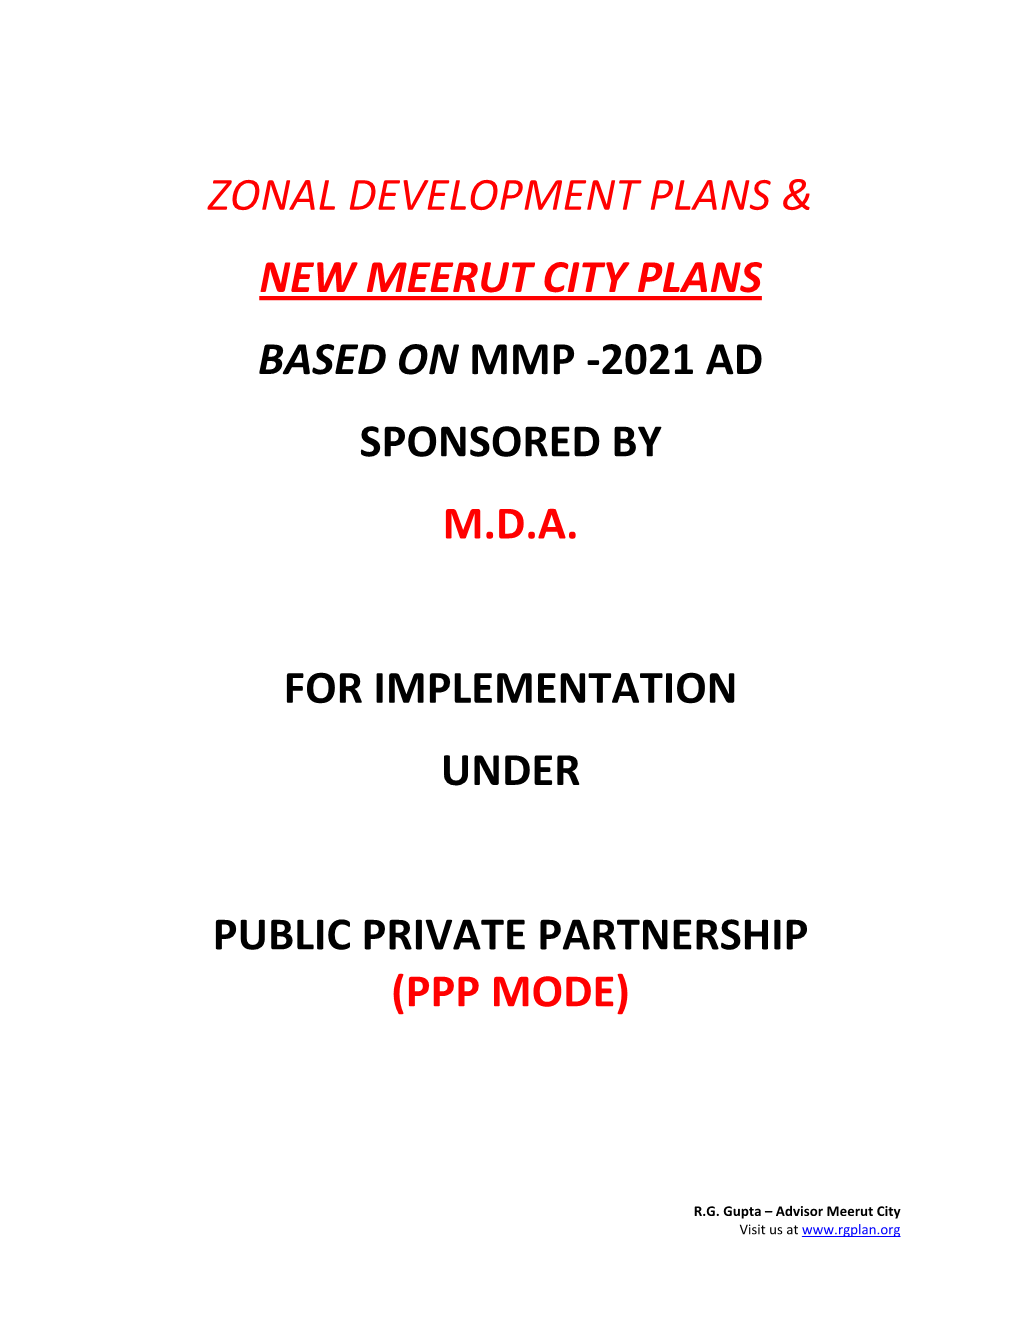 Zonal Development Plans & New Meerut City